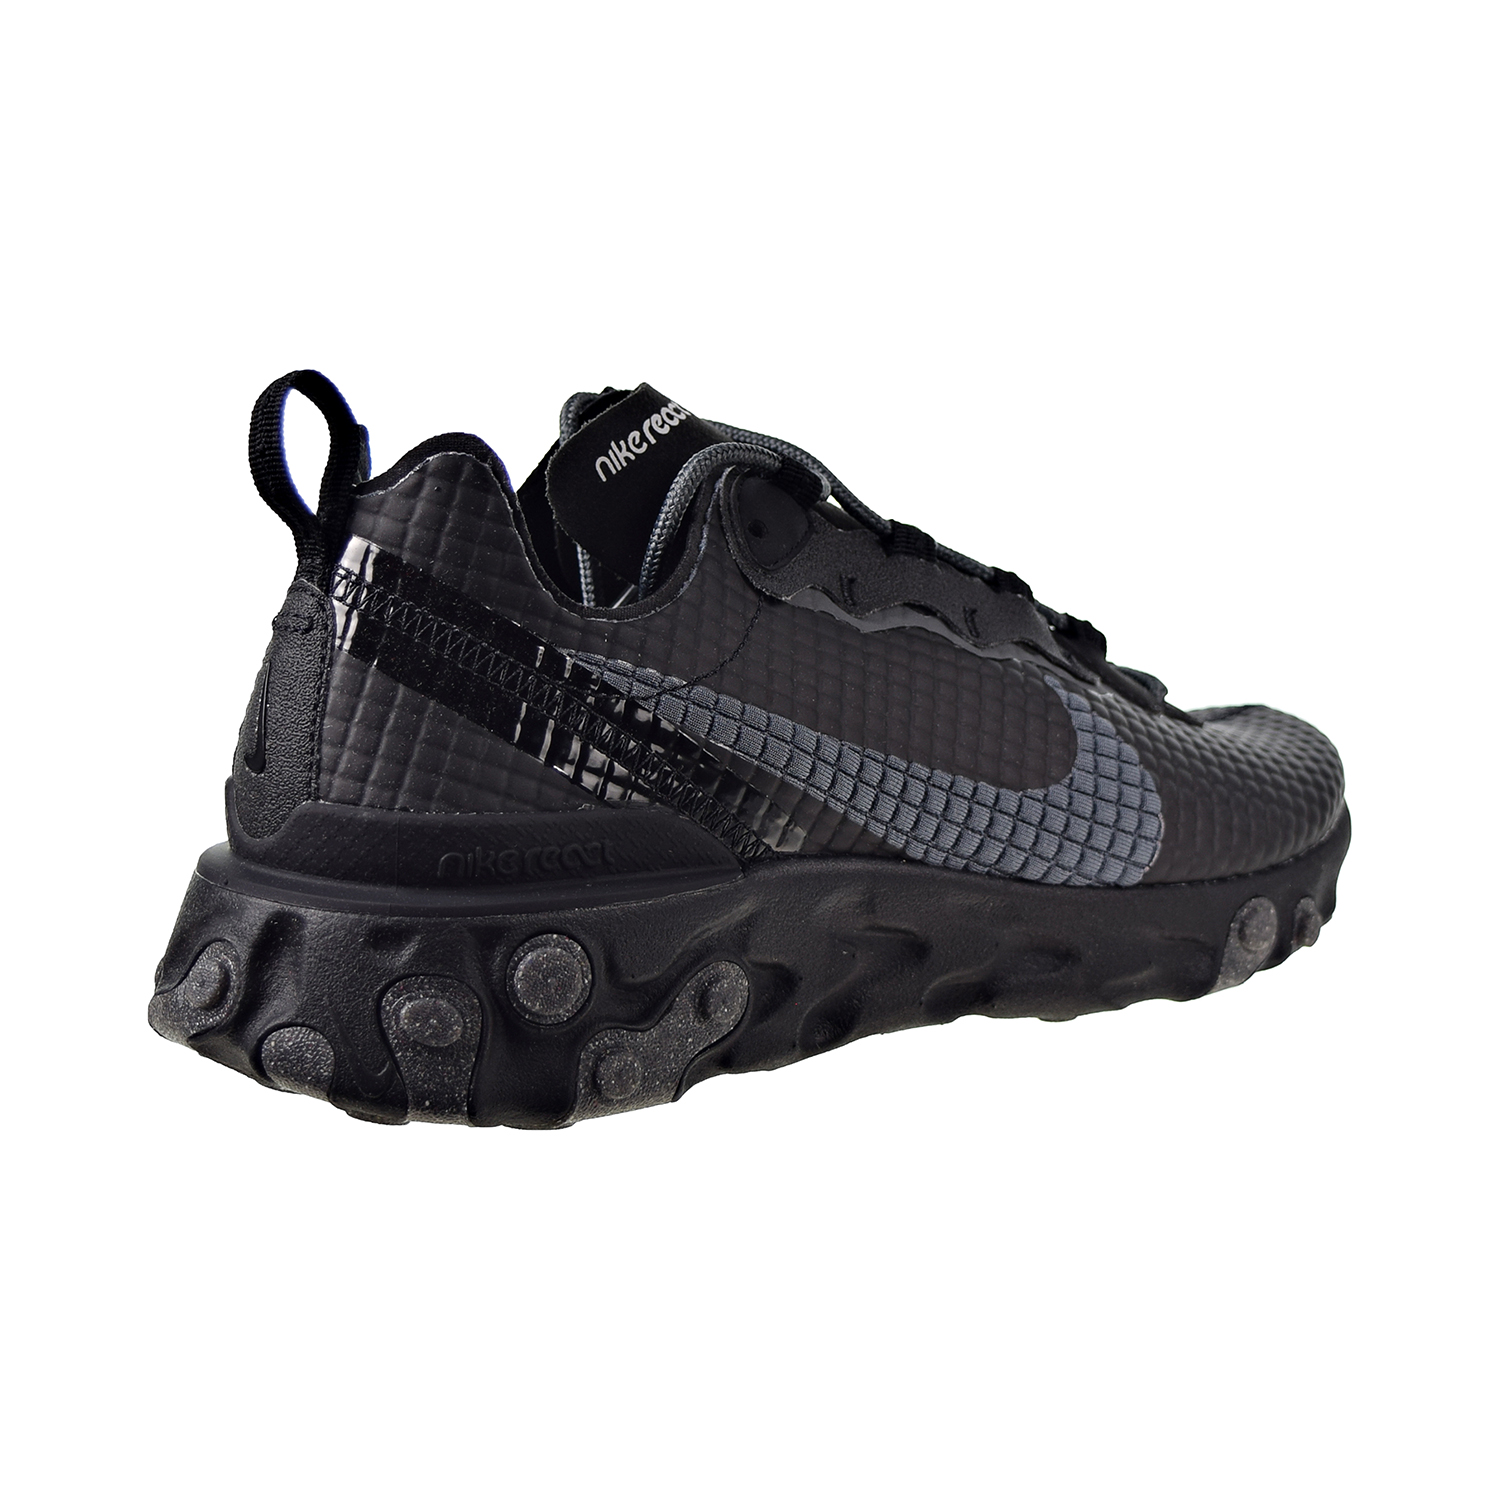 Nike React Element 55 PRM Men's Shoes Black-Dark Grey-Anthracite ci3835-002 - image 3 of 6